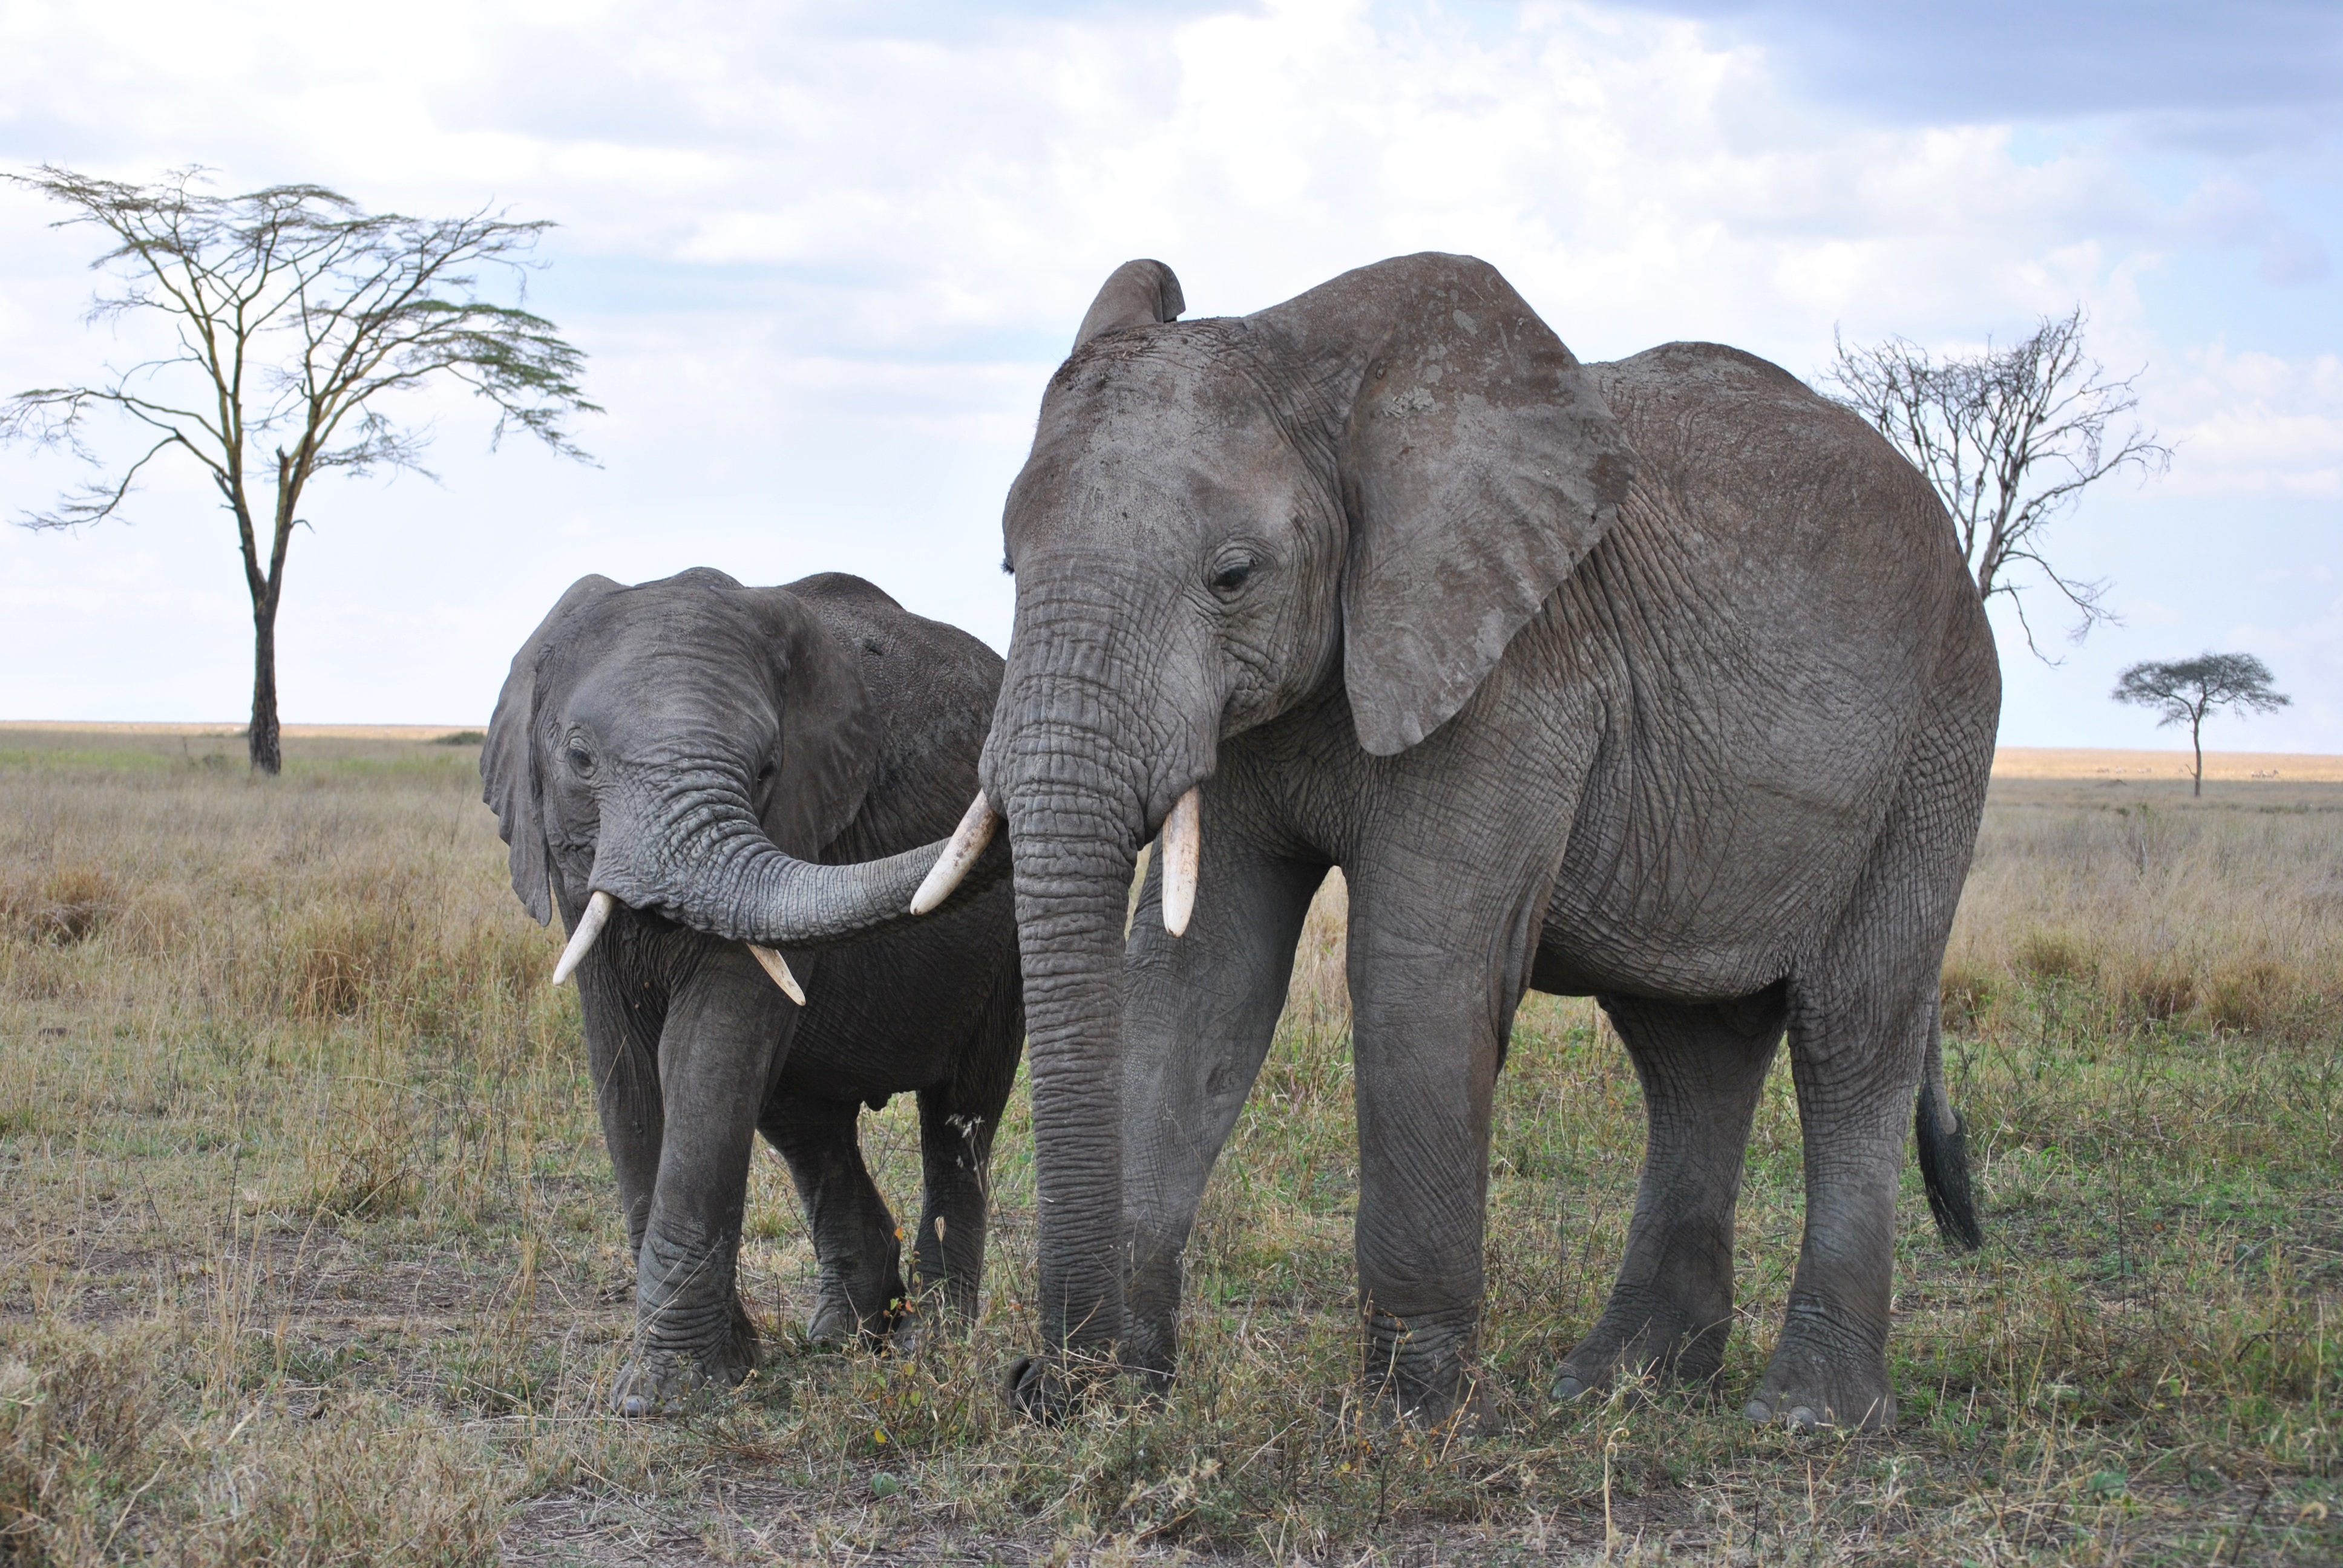 Elephants in the Serengeti National Park, Tanzania by Nici Keil